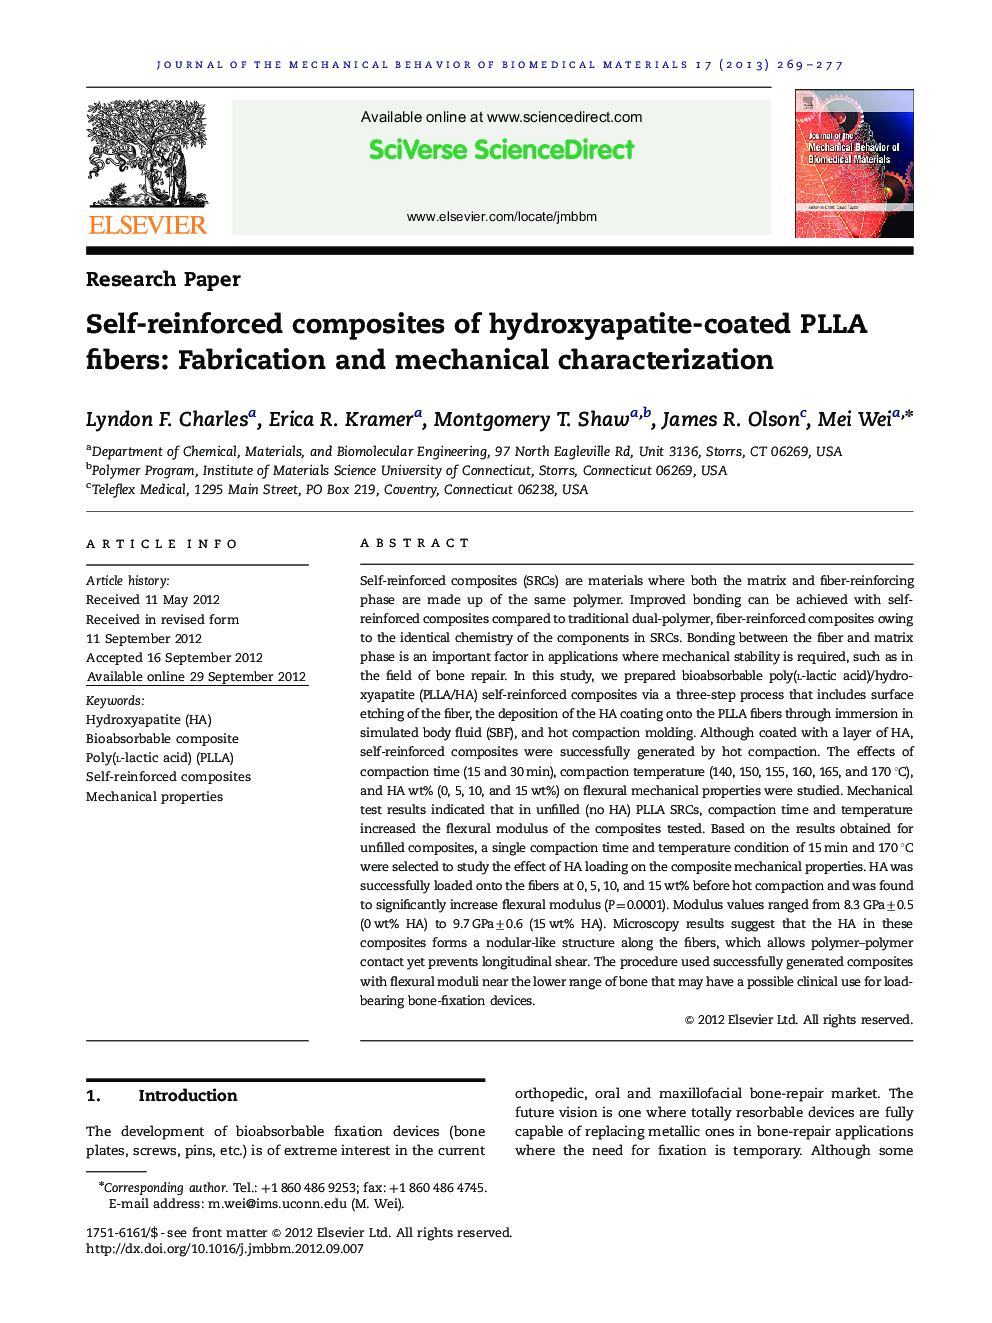 Self-reinforced composites of hydroxyapatite-coated PLLA fibers: Fabrication and mechanical characterization